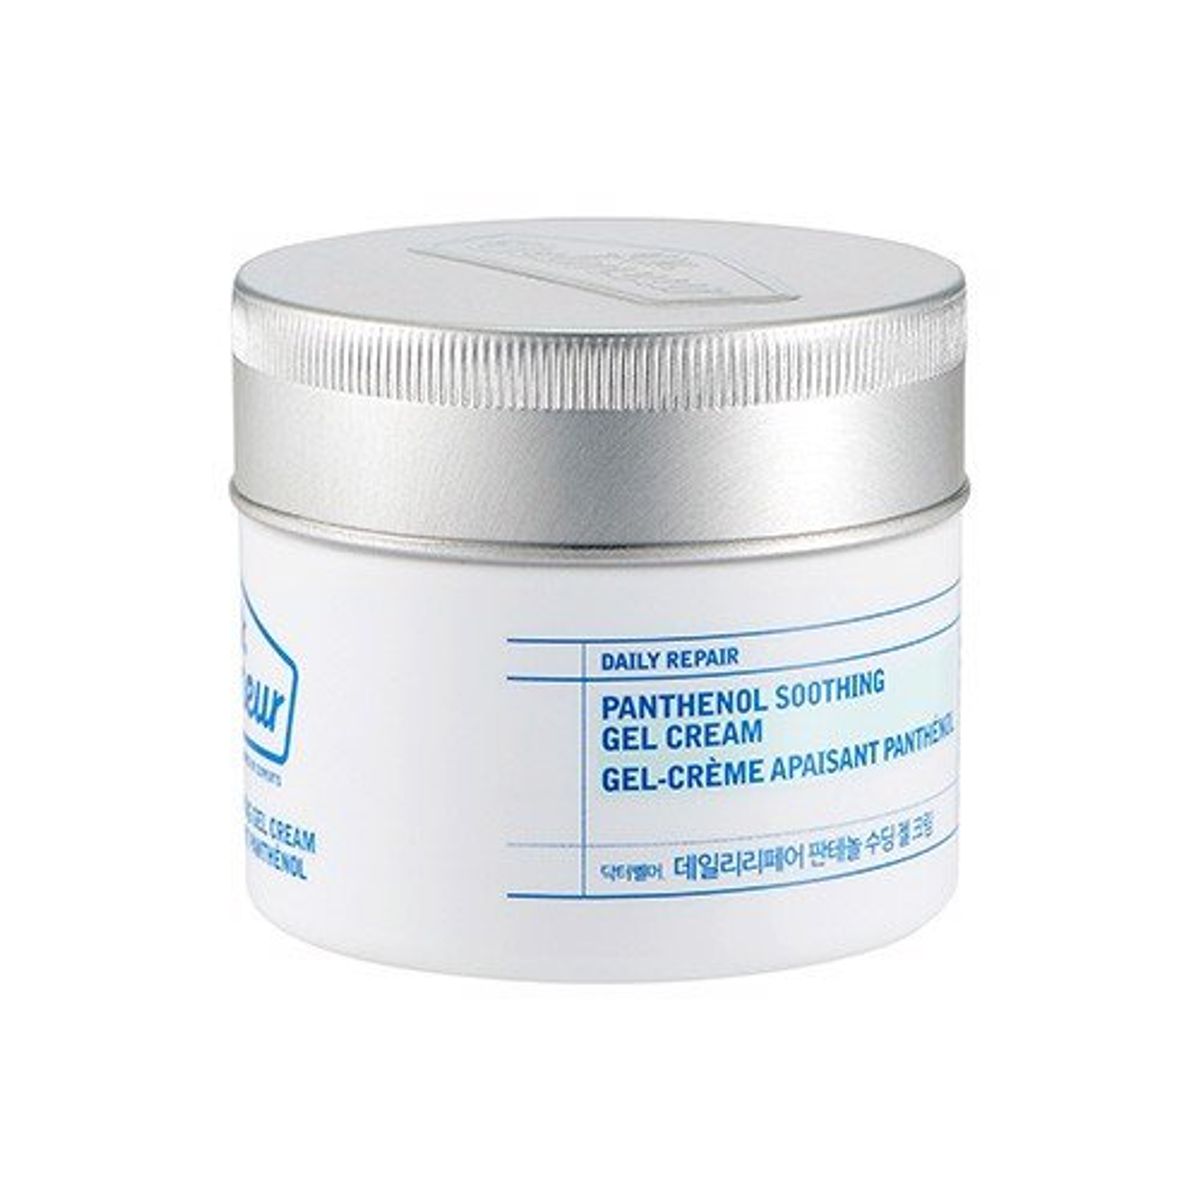 kem-duong-da-dr-belmeur-daily-repair-panthenol-soothing-gel-cream-100ml-1